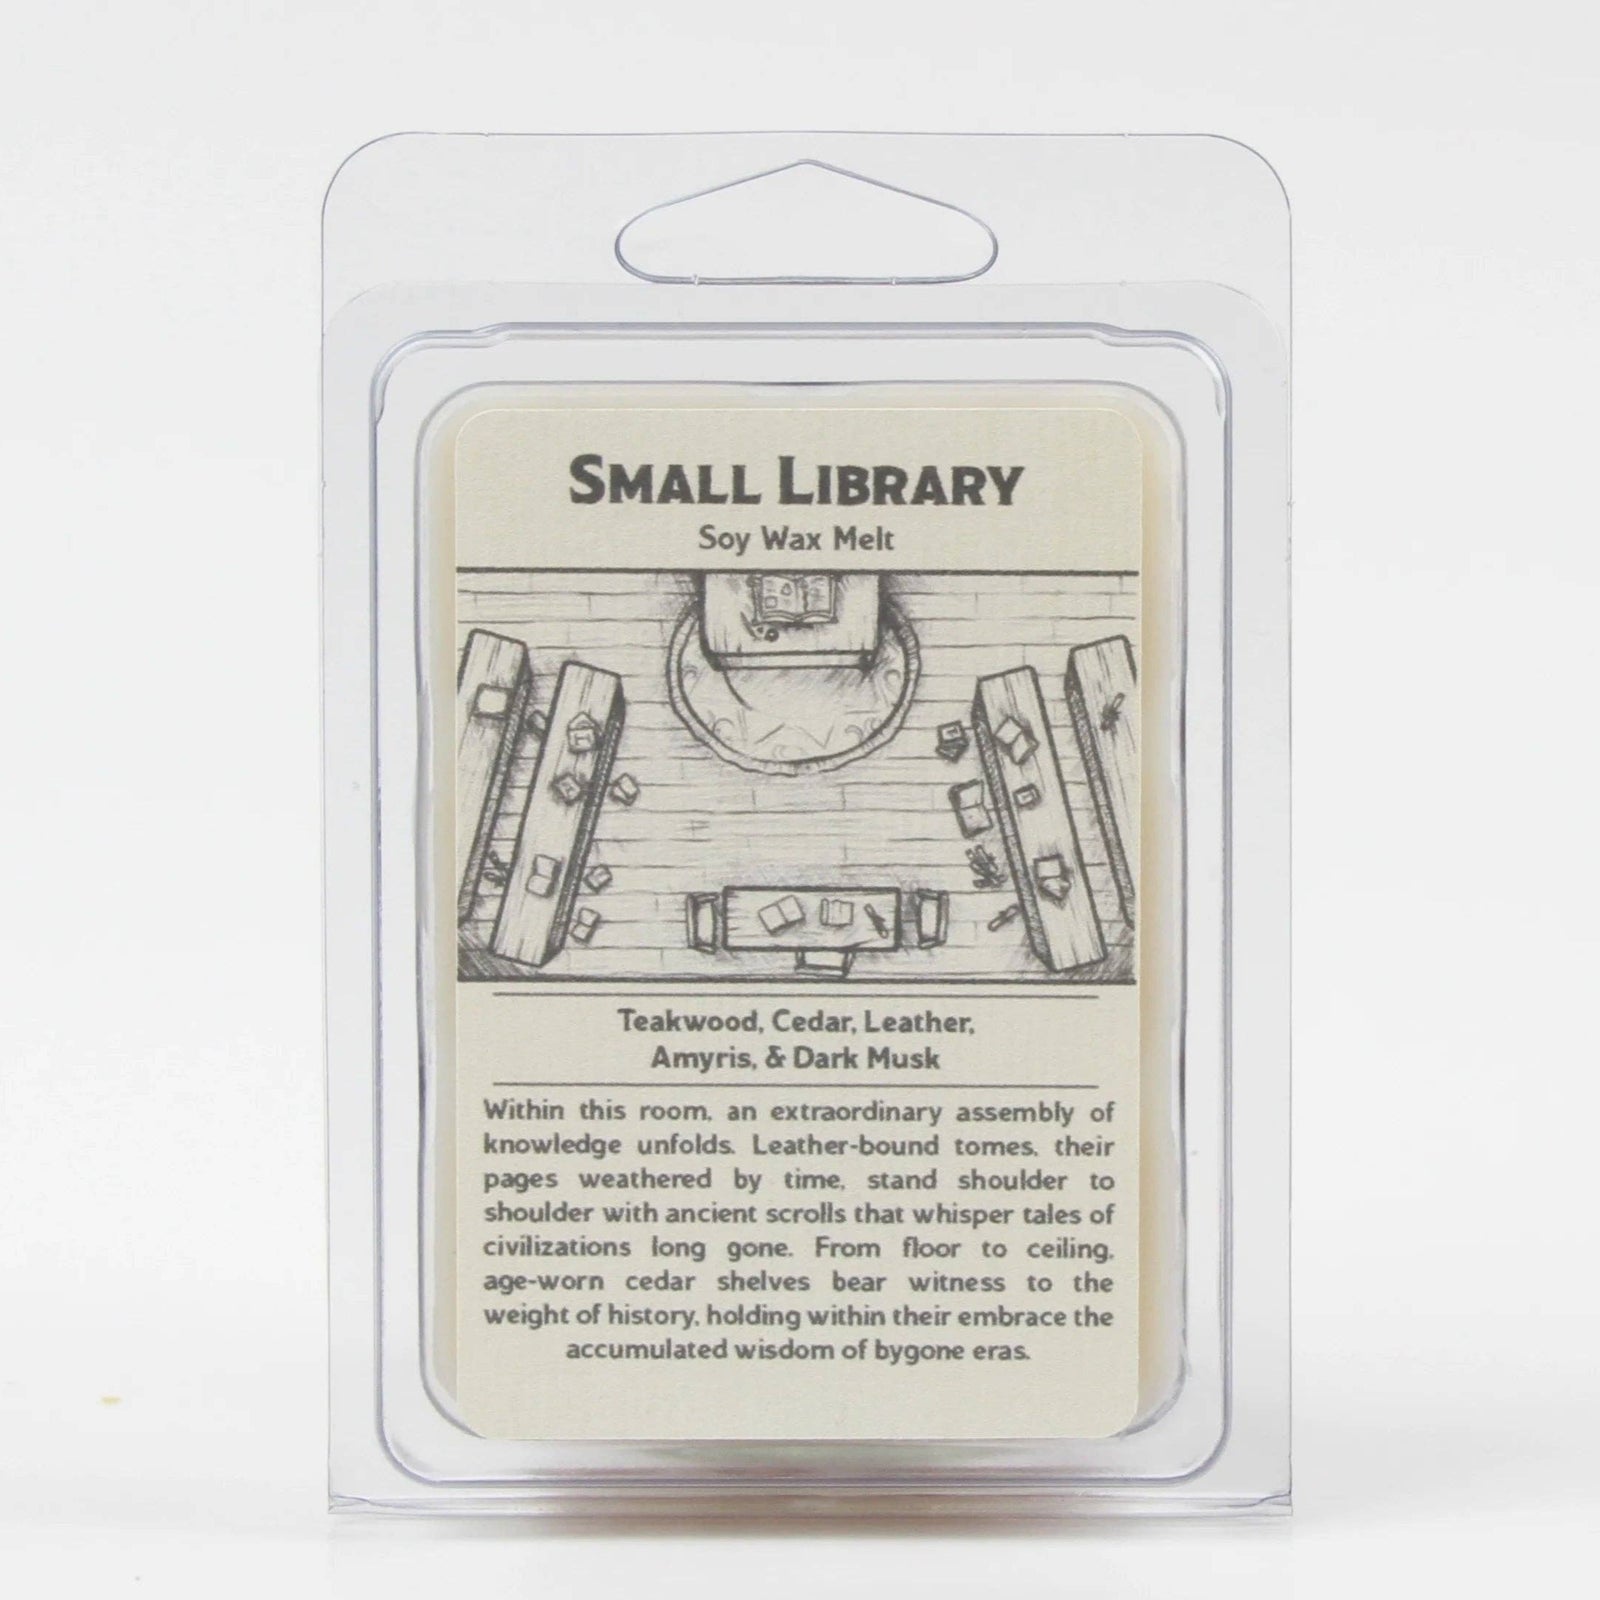 Small Library - Wax Melt Scent Notes: Teakwood, Cedar, Leather, Amyris, & Dark Musk